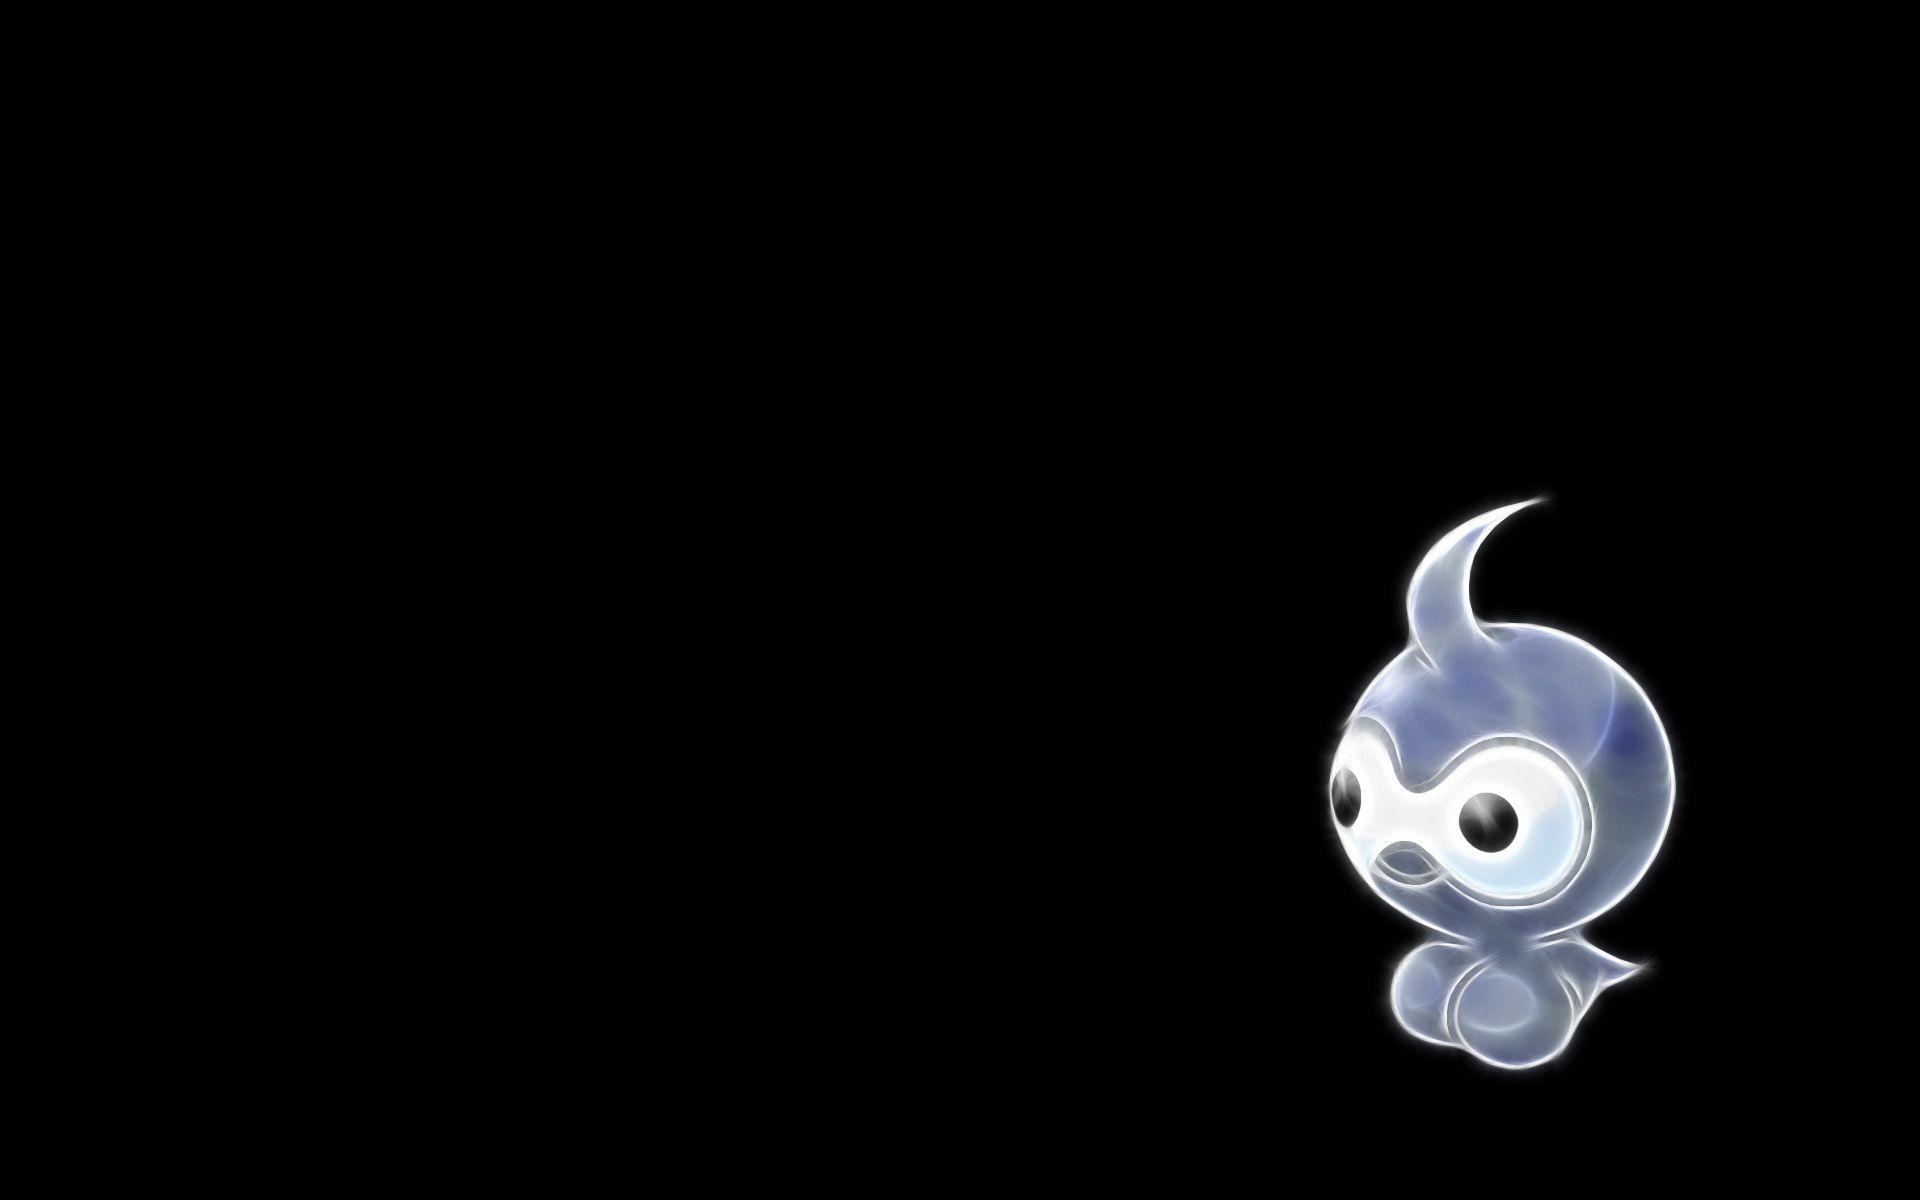 Castform (Pokémon) HD Wallpaper and Background Image